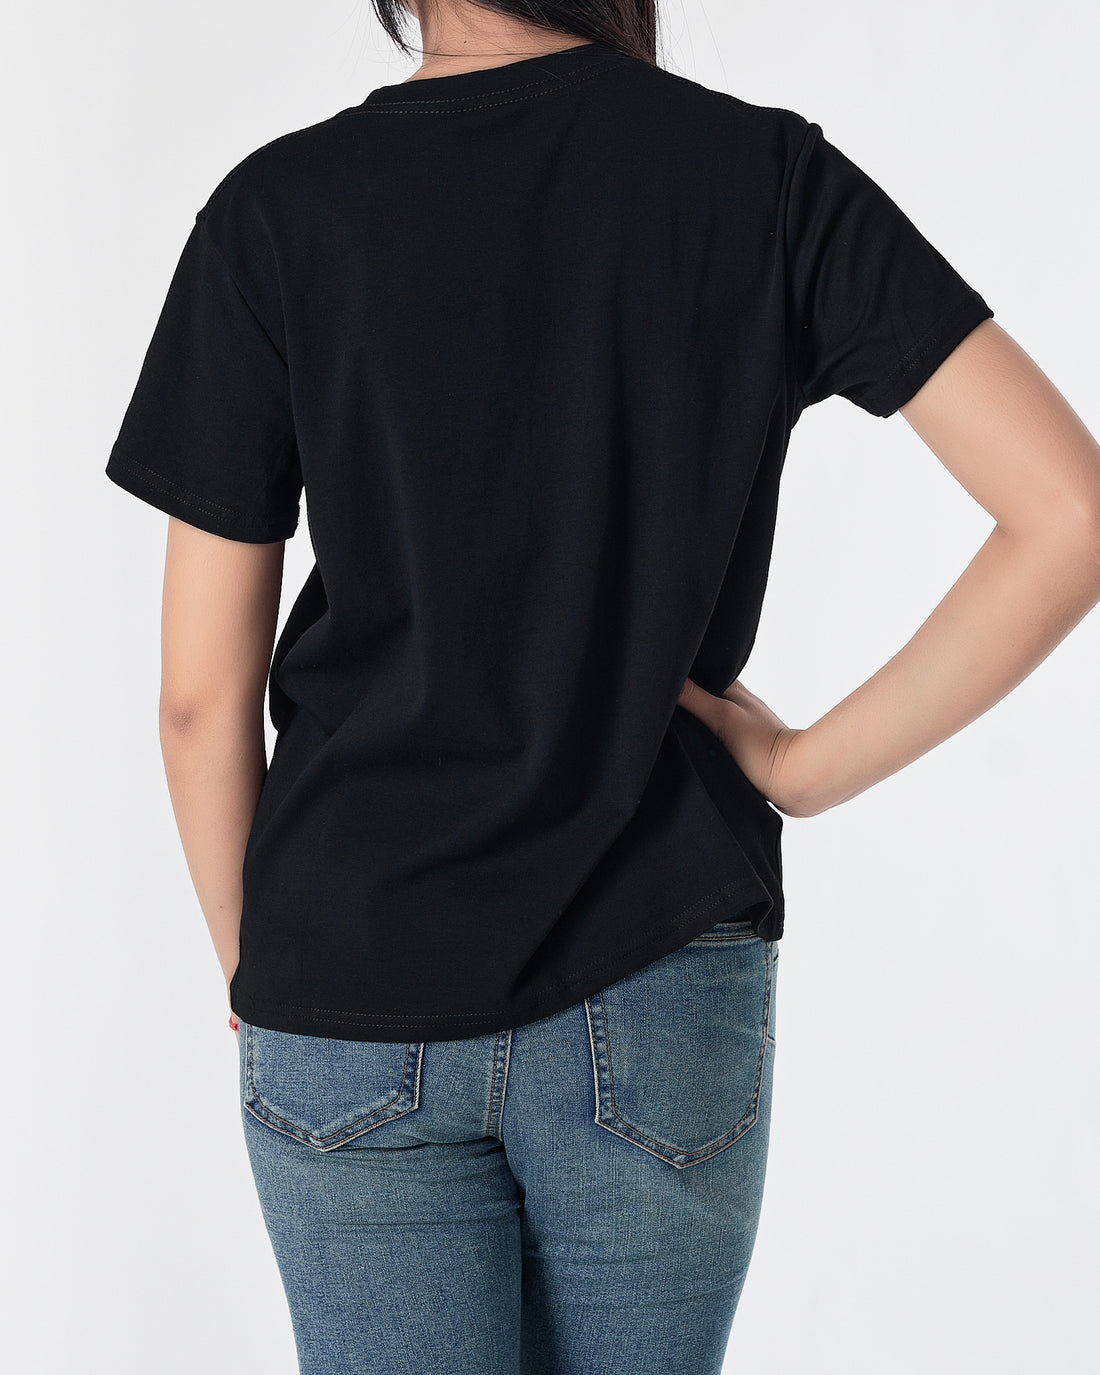 MIU Rhinestone Dripping Chain Lady Black T-Shirt 28.90